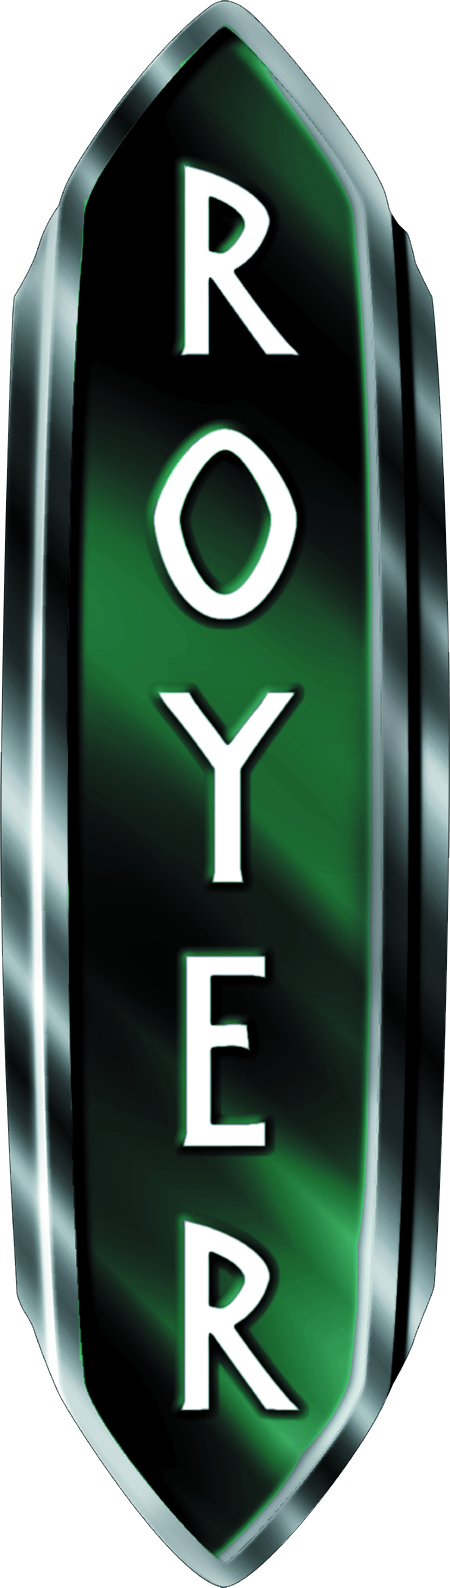 Royer-logo-Lg.jpg